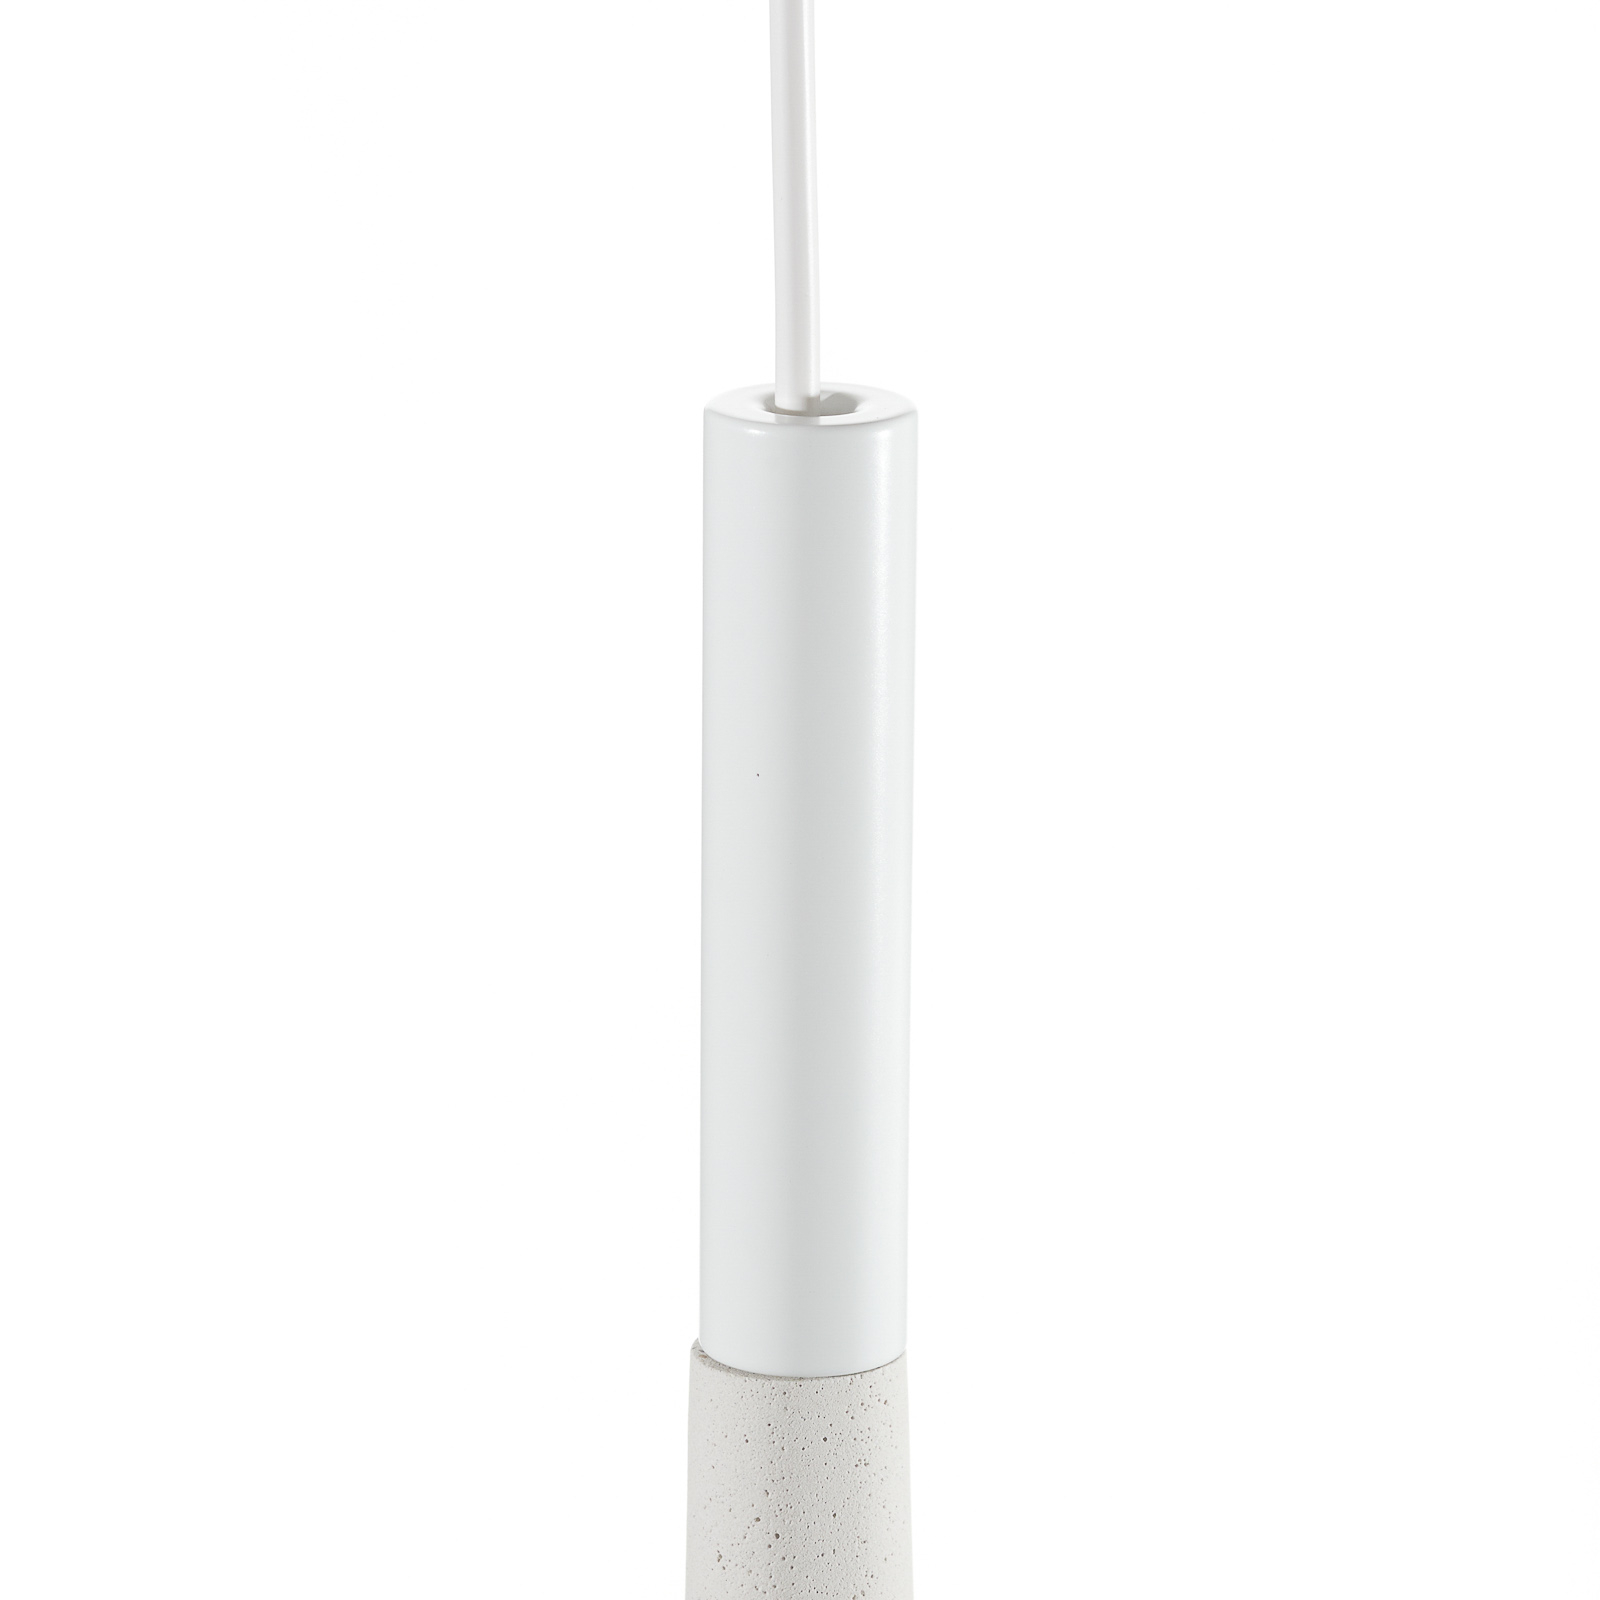 Foscarini Aplomb hanglamp GU10 van beton wit